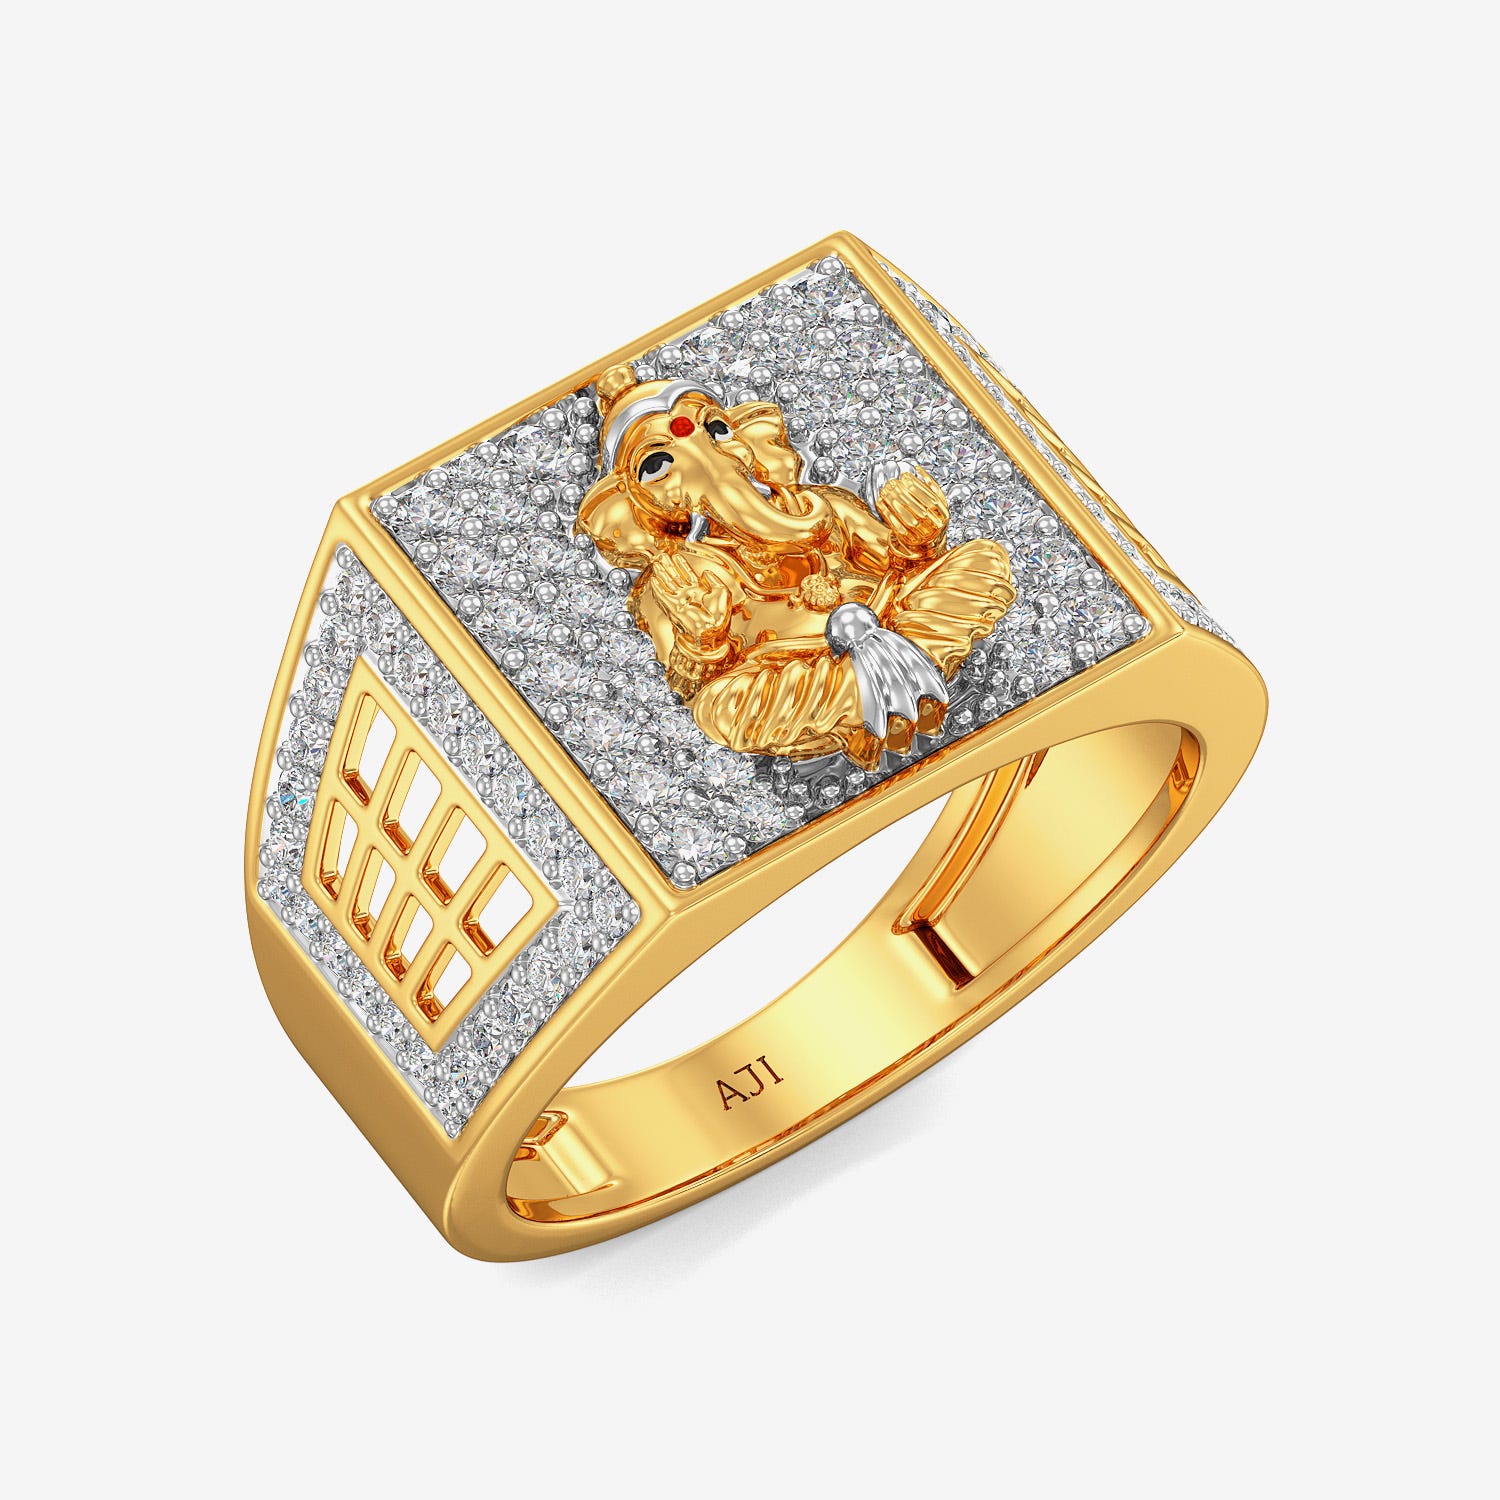 Bull signet ring design for men in 18 karats gold-vachngandaiphat.com.vn